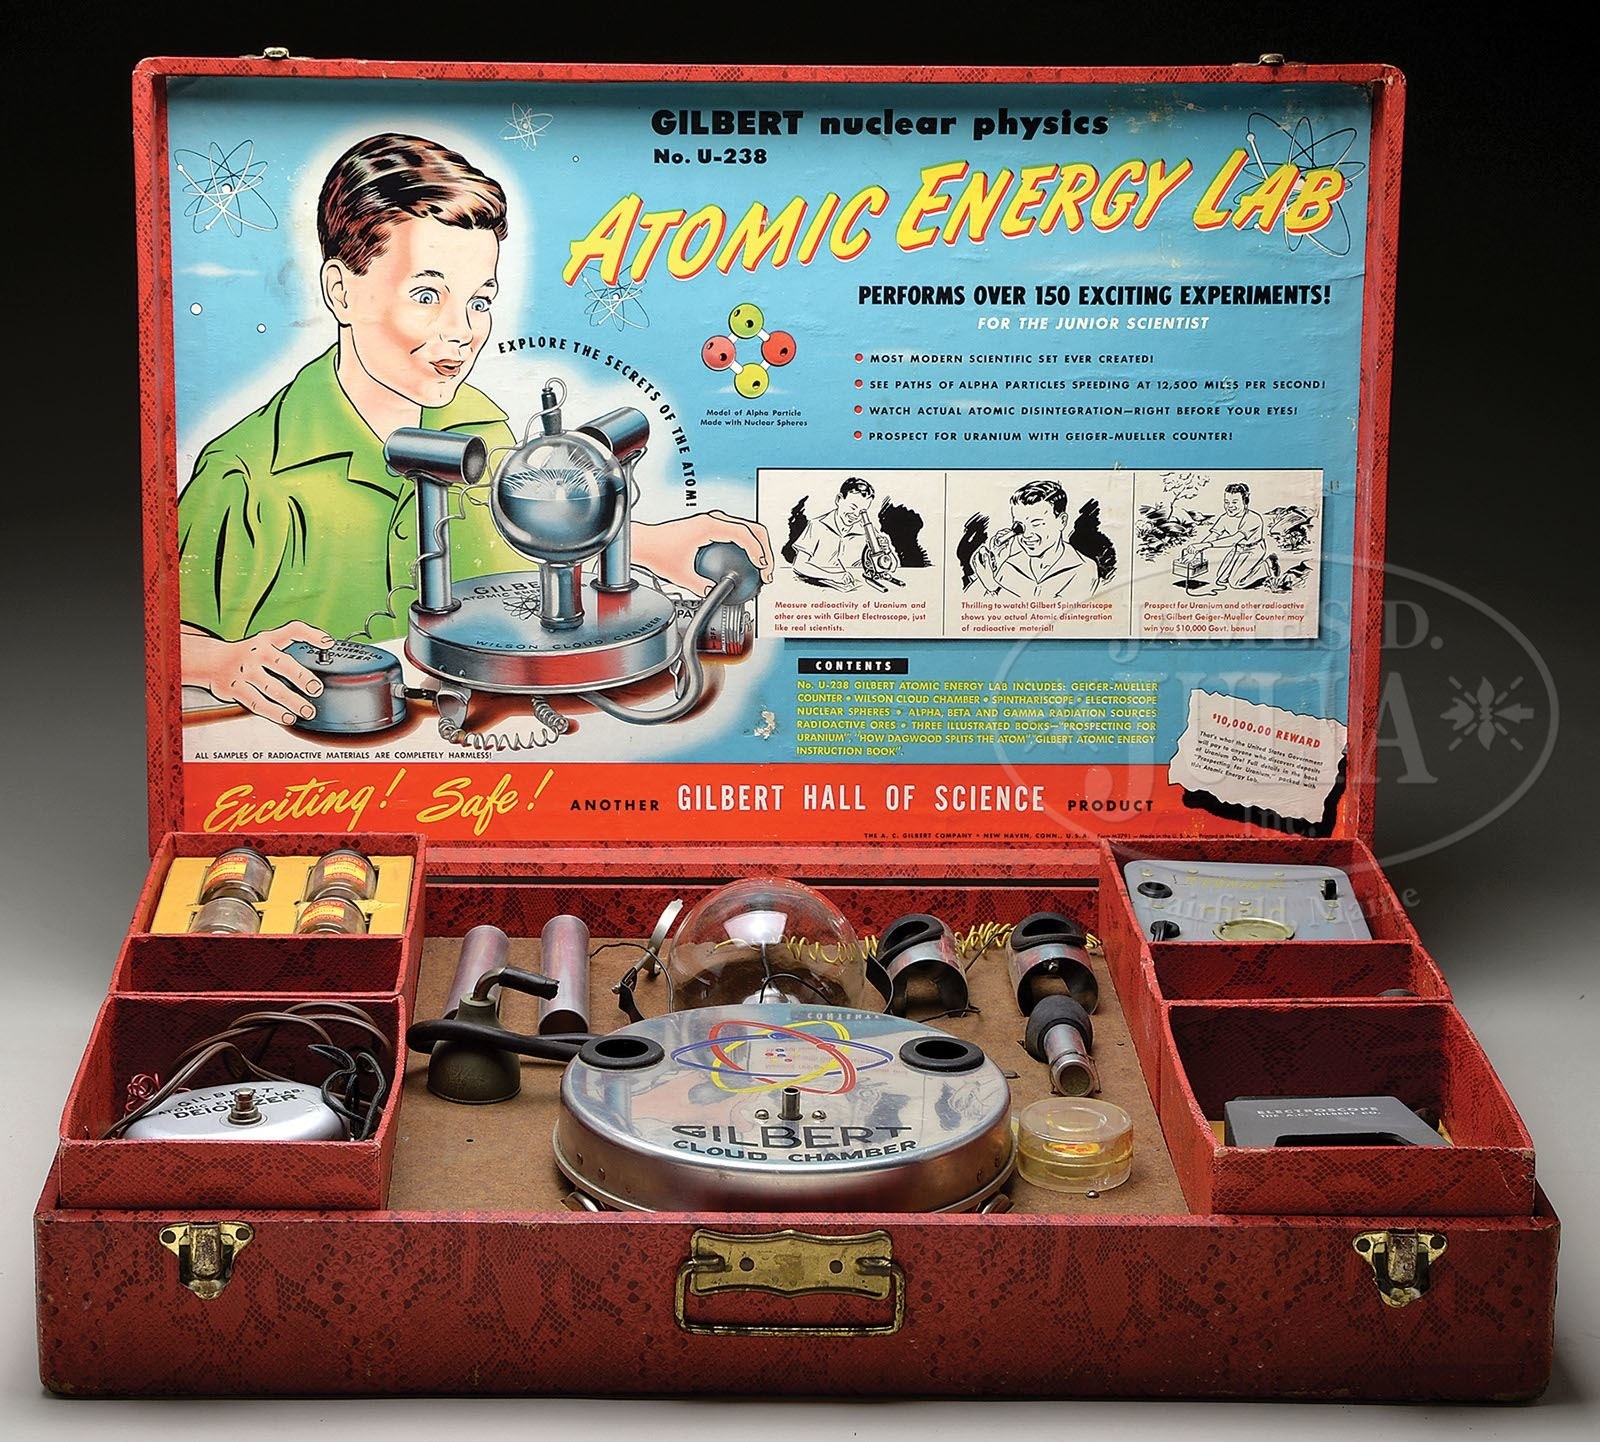 The 1950 atomic Energy Set